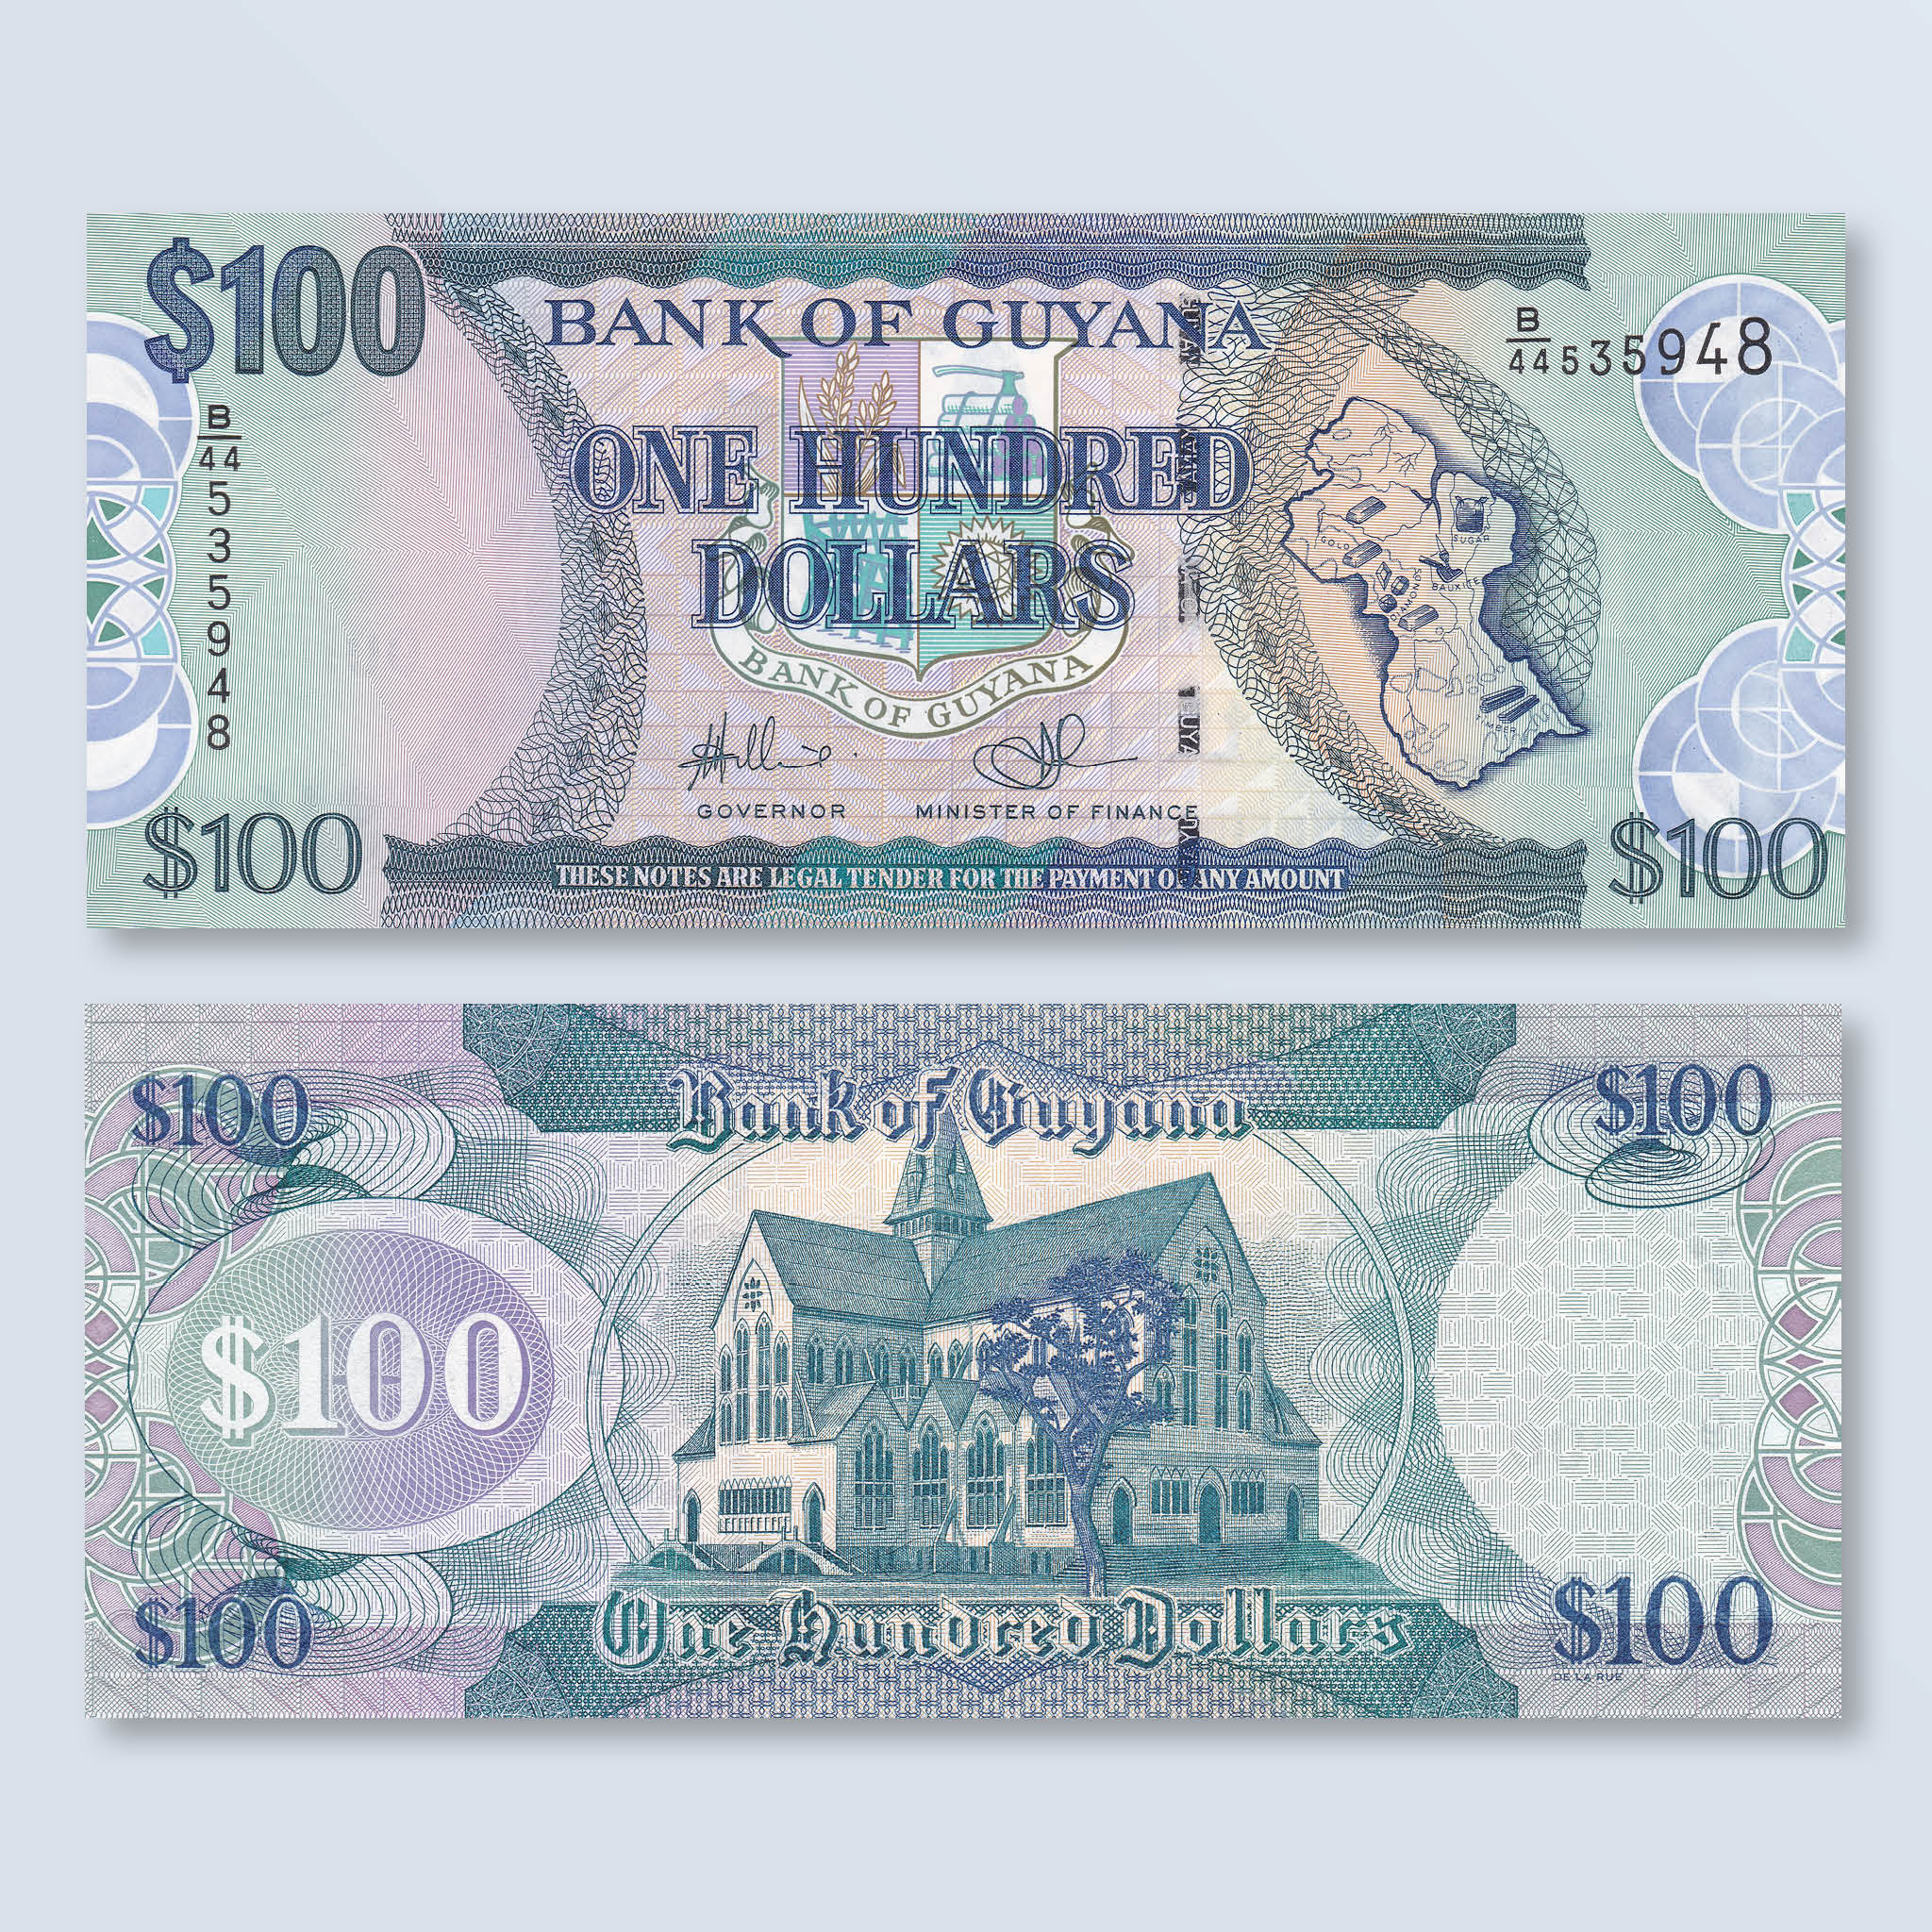 Guyana 100 Dollars, 2006, B114a, P36a, UNC - Robert's World Money - World Banknotes